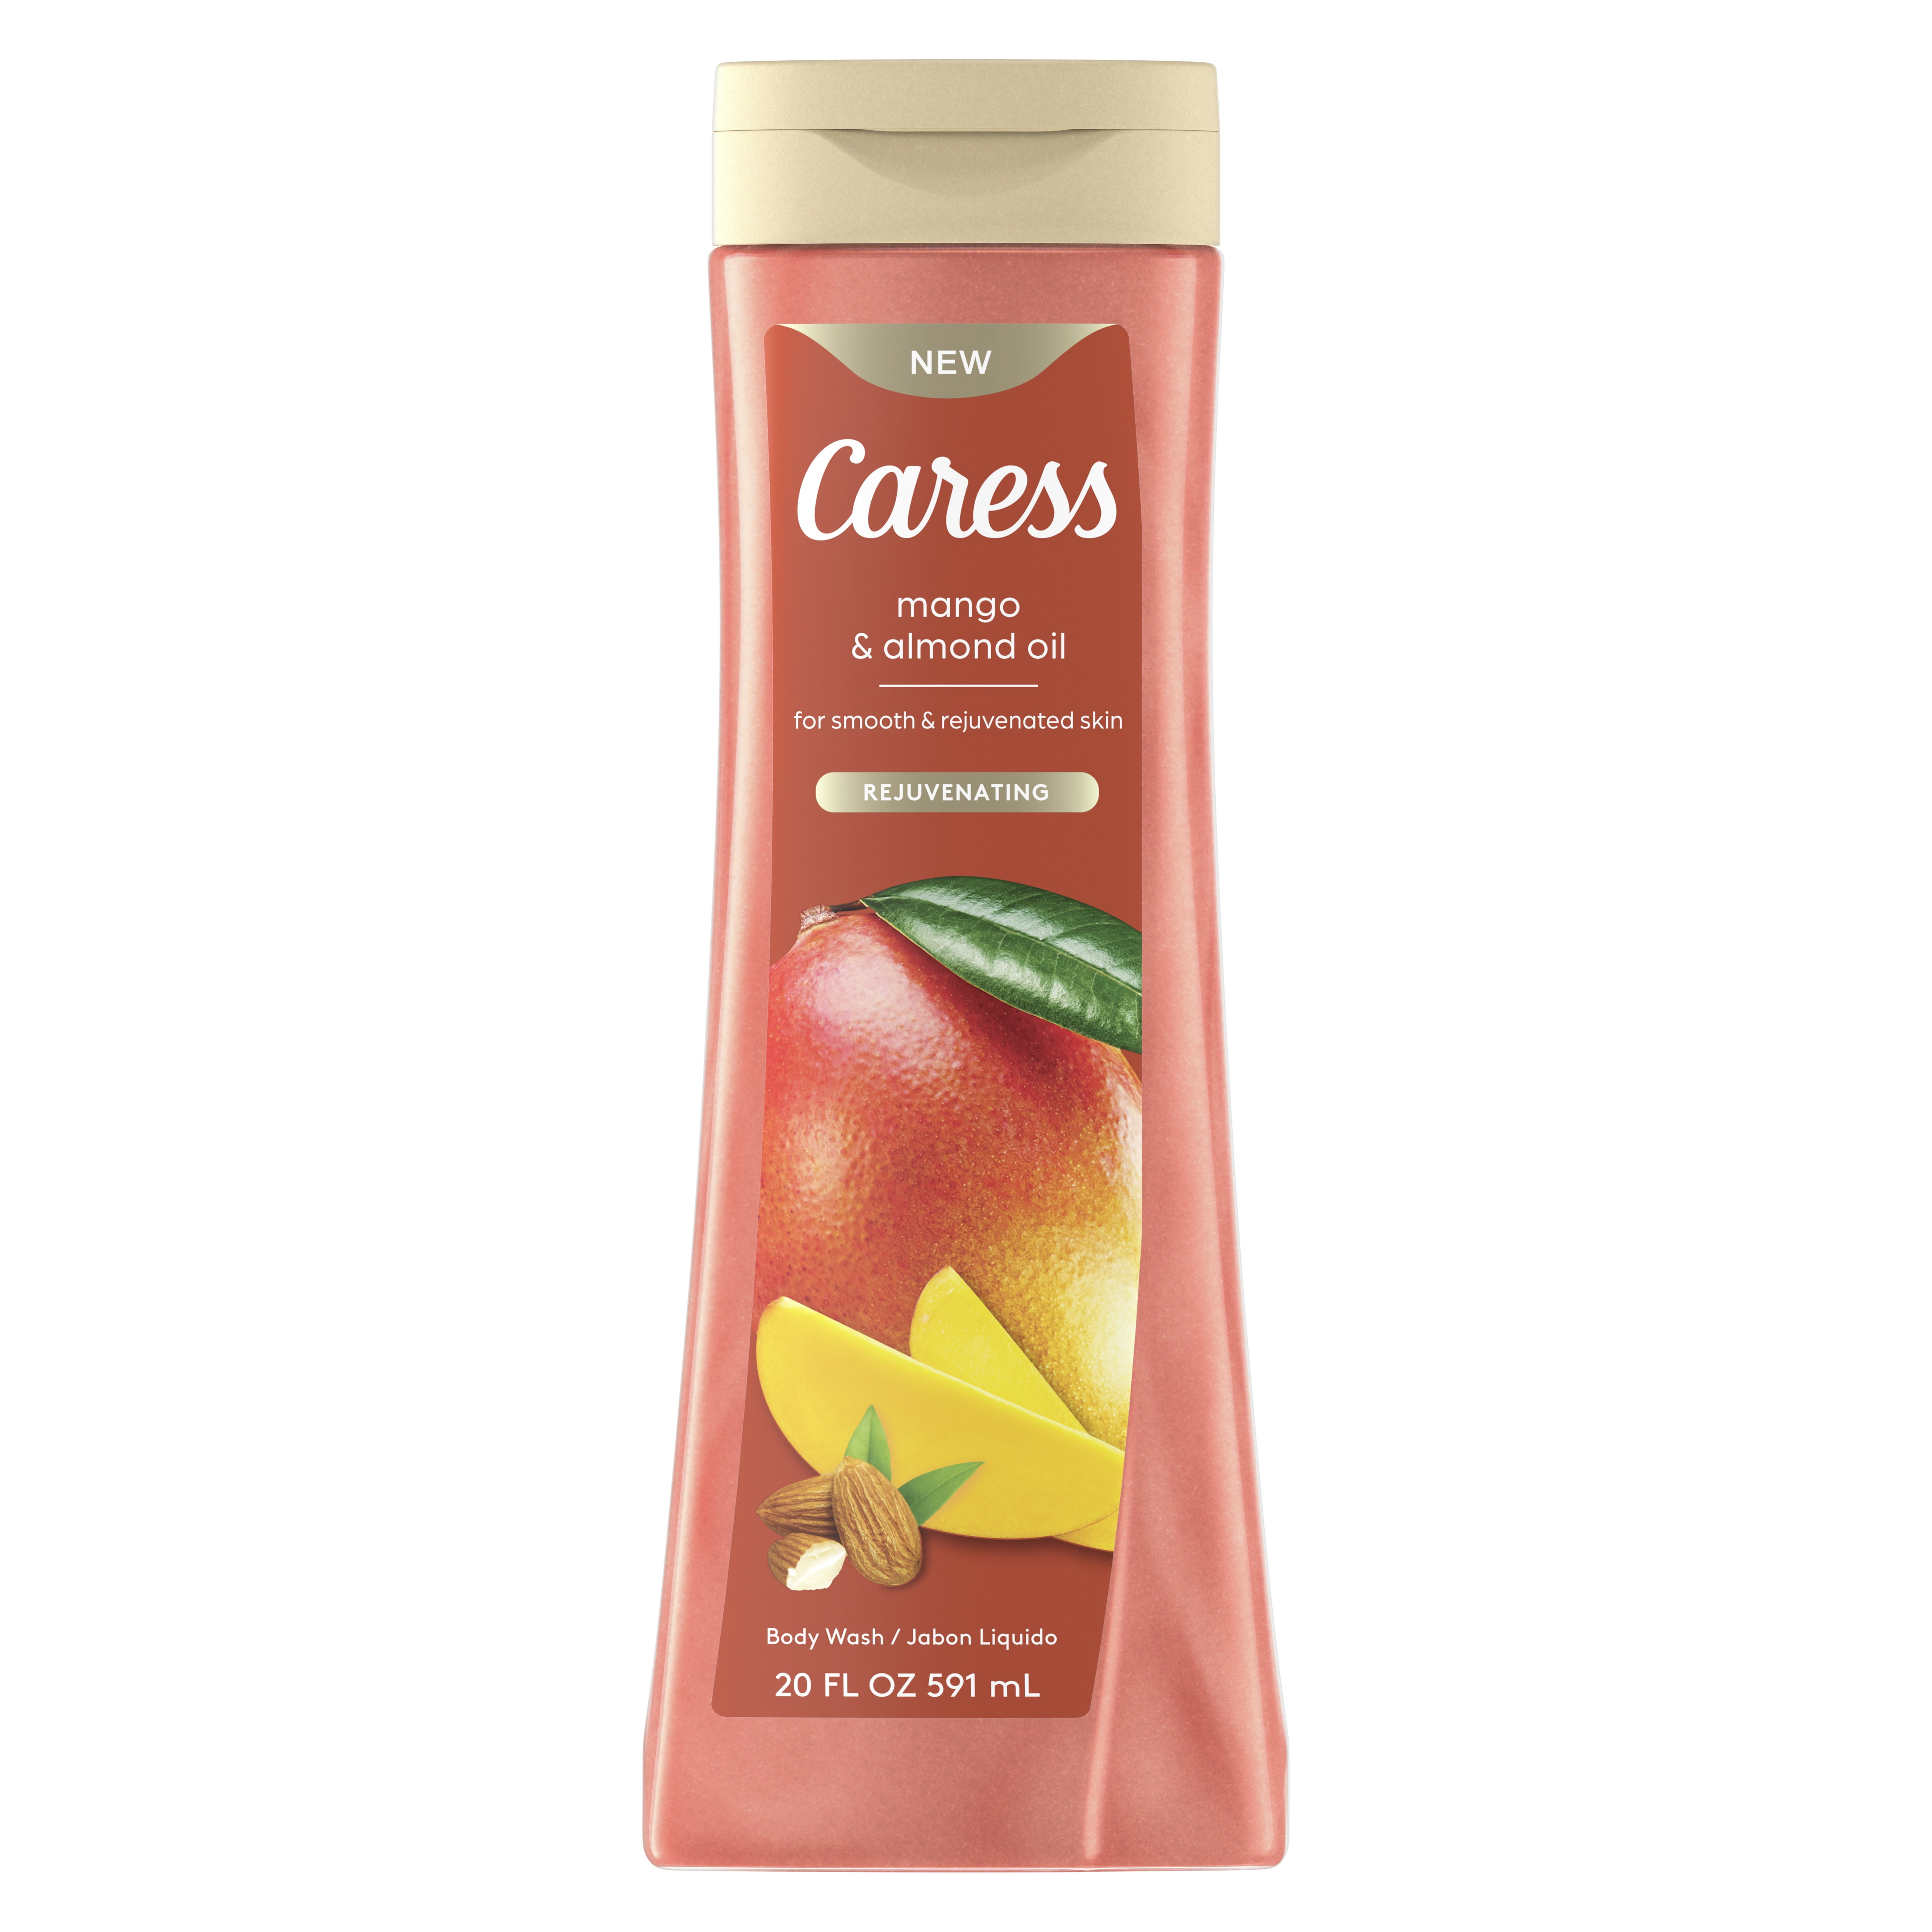 Caress Body Wash For Smooth And Rejuvenated Skin Mango & Almond Oil 20 fl oz